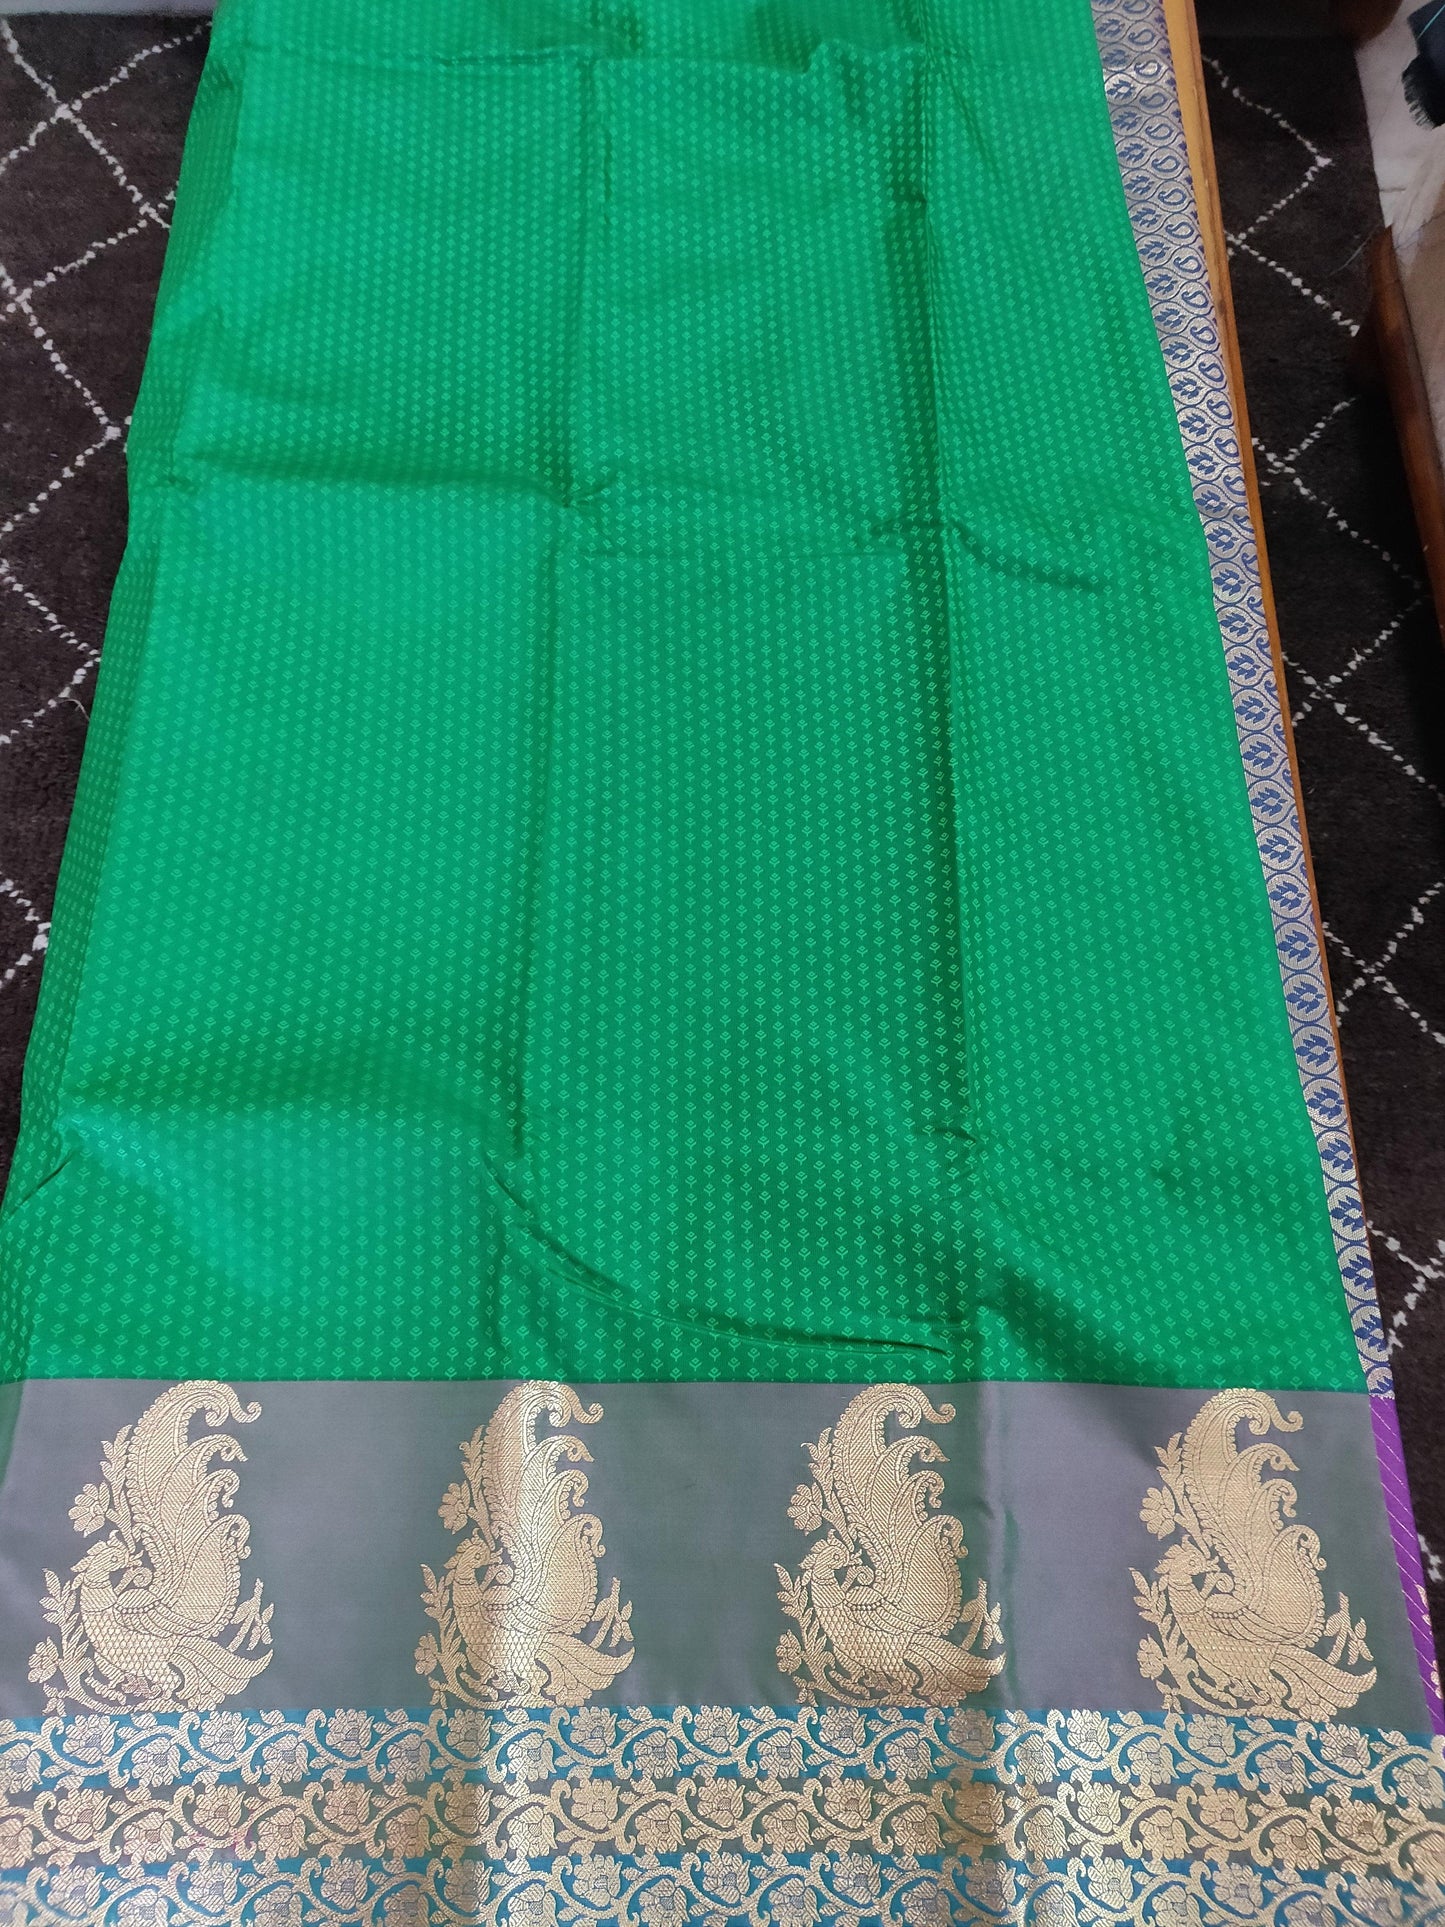 Green Kanchi Blend Kanjivaram Silk Saree Kanchi06-Anvi Creations-Kanchi Blend Saree,Kanjivaram Saree